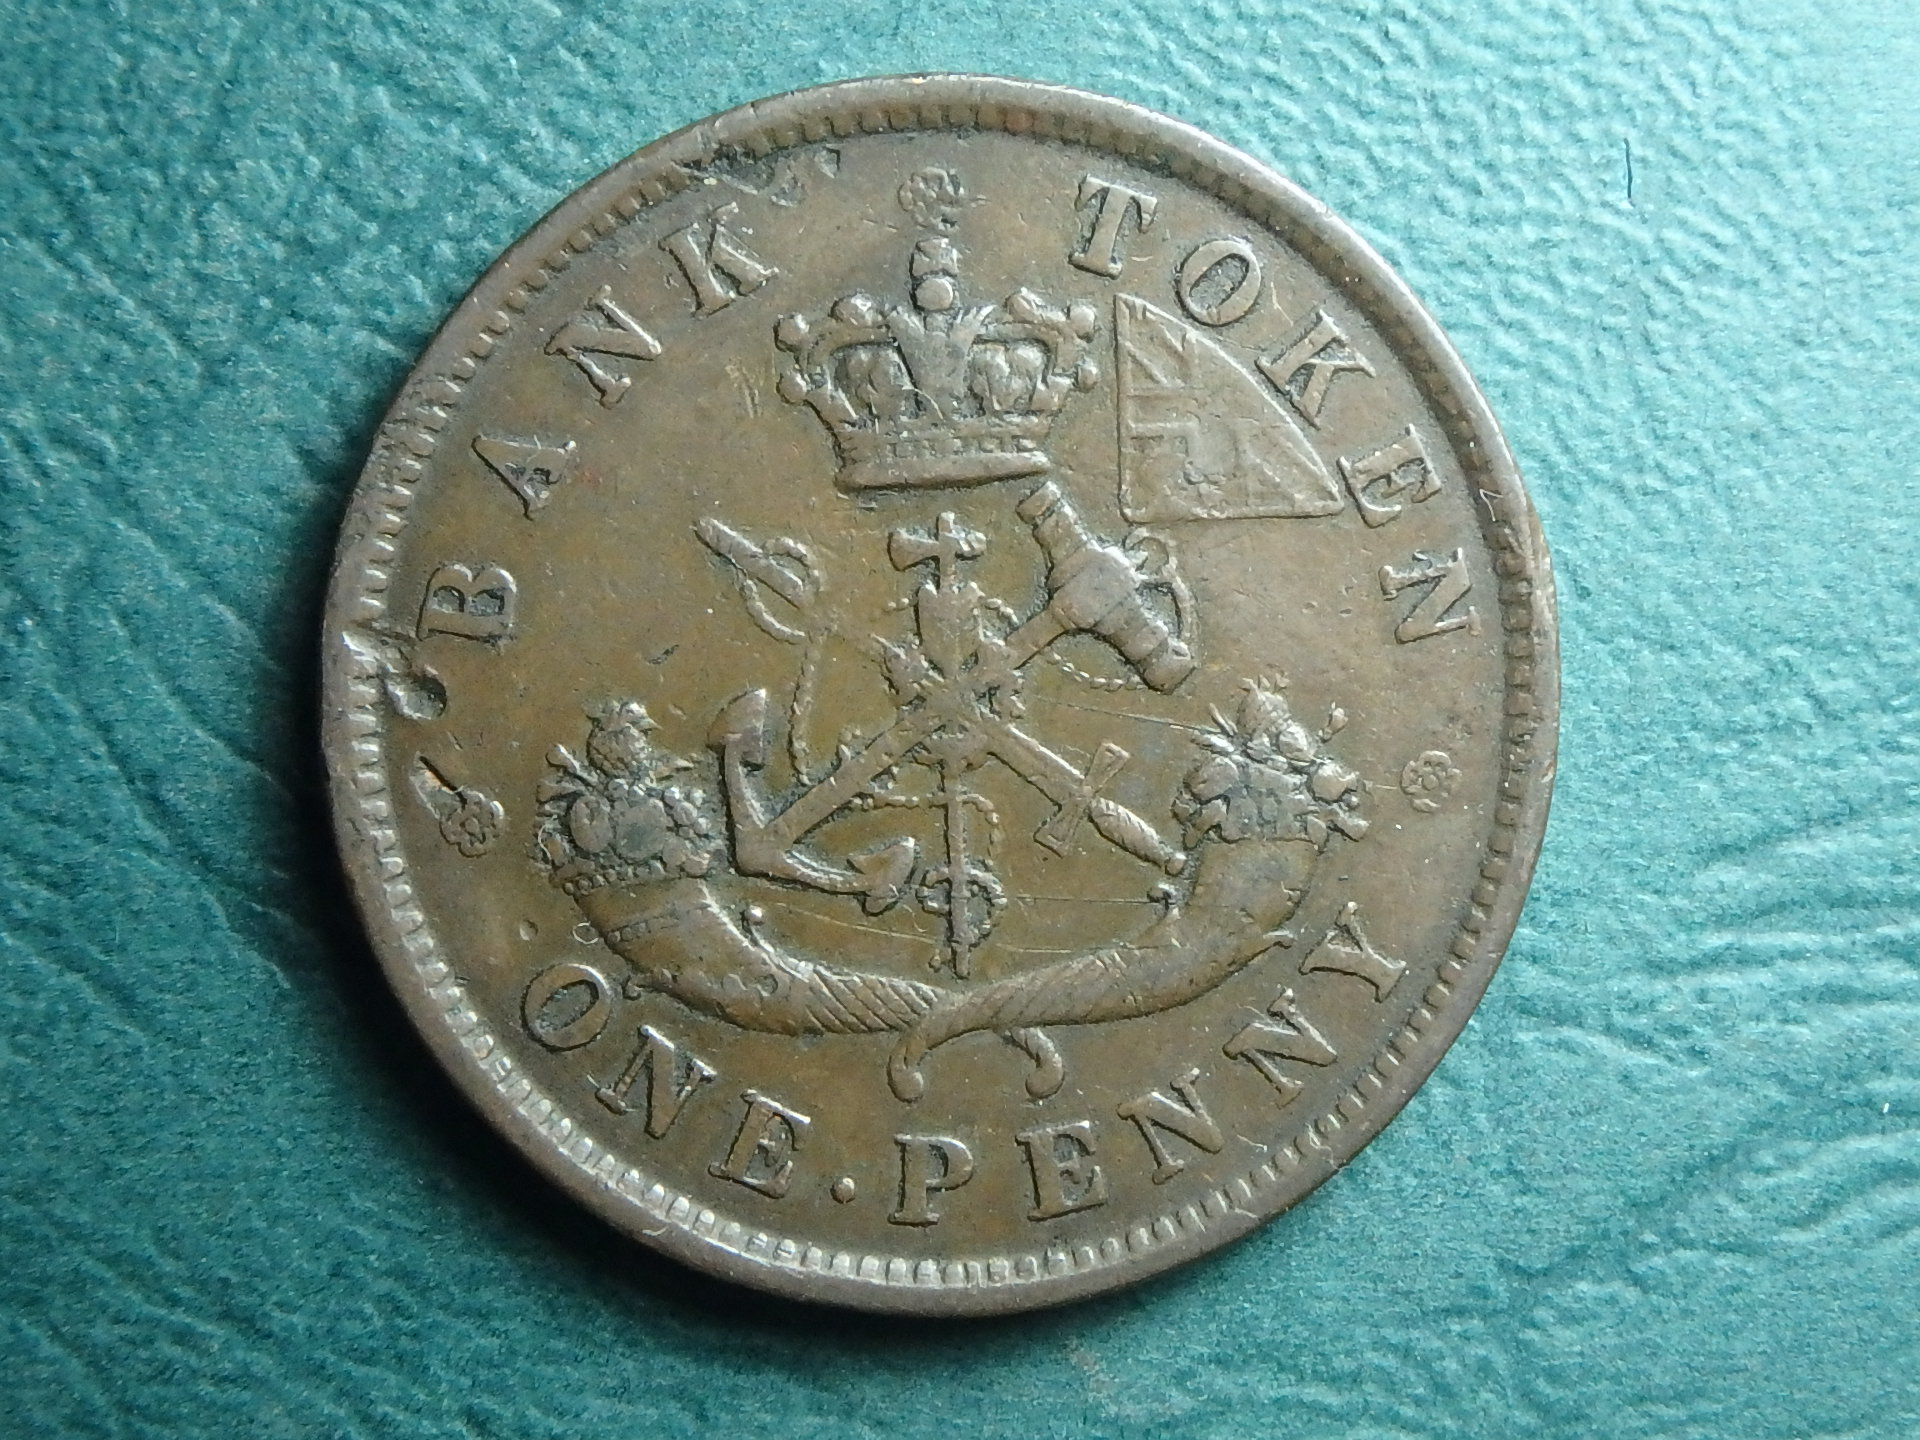 1857 Canada 1 p token obv.JPG